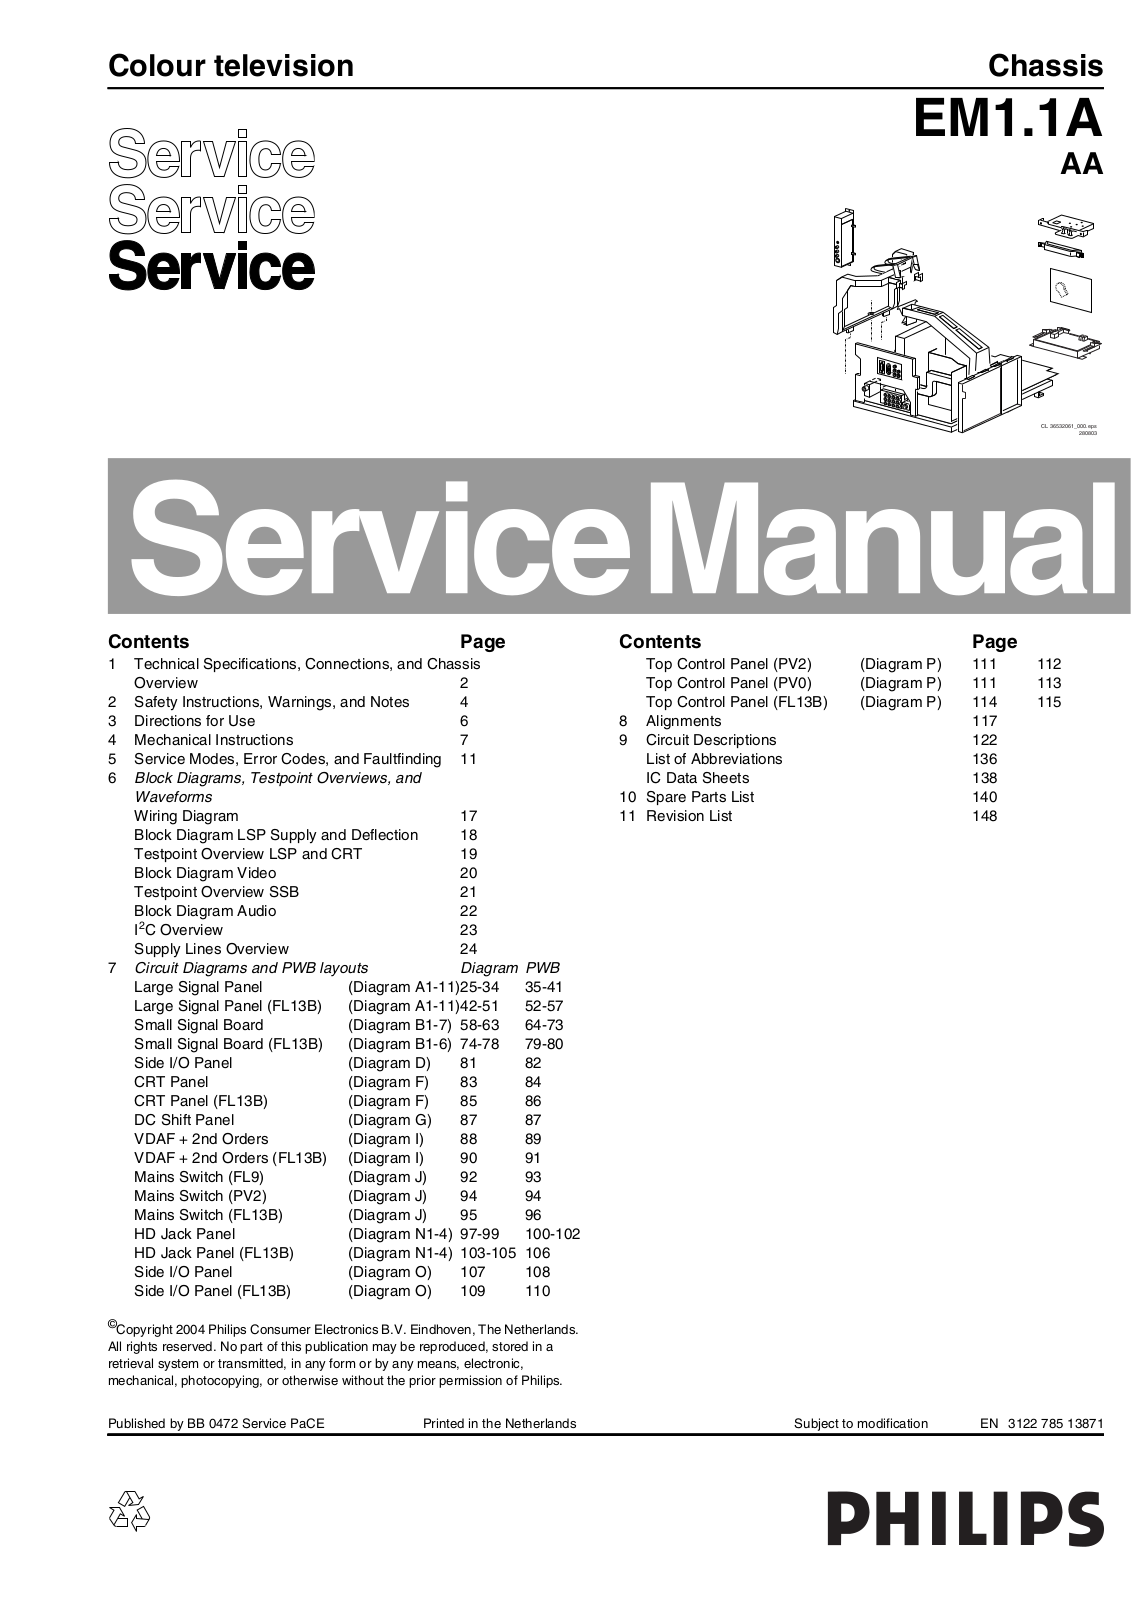 Philips EM1.1A AA Service Manual